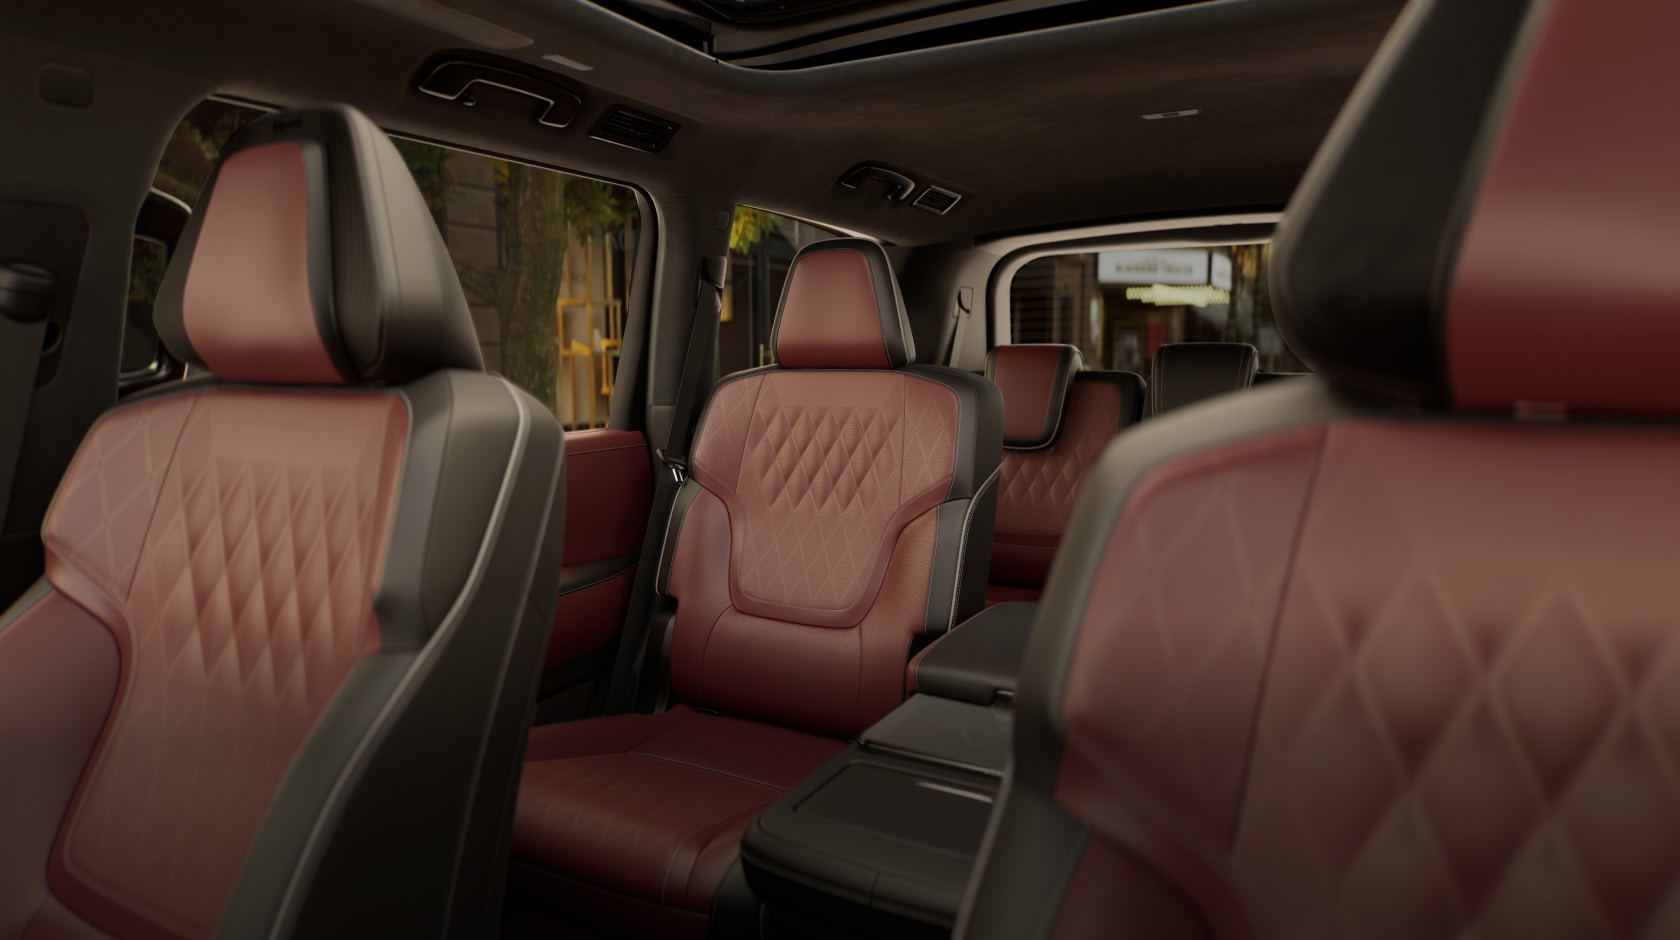 2025 INFINITI QX80 interior highlighting second row seating